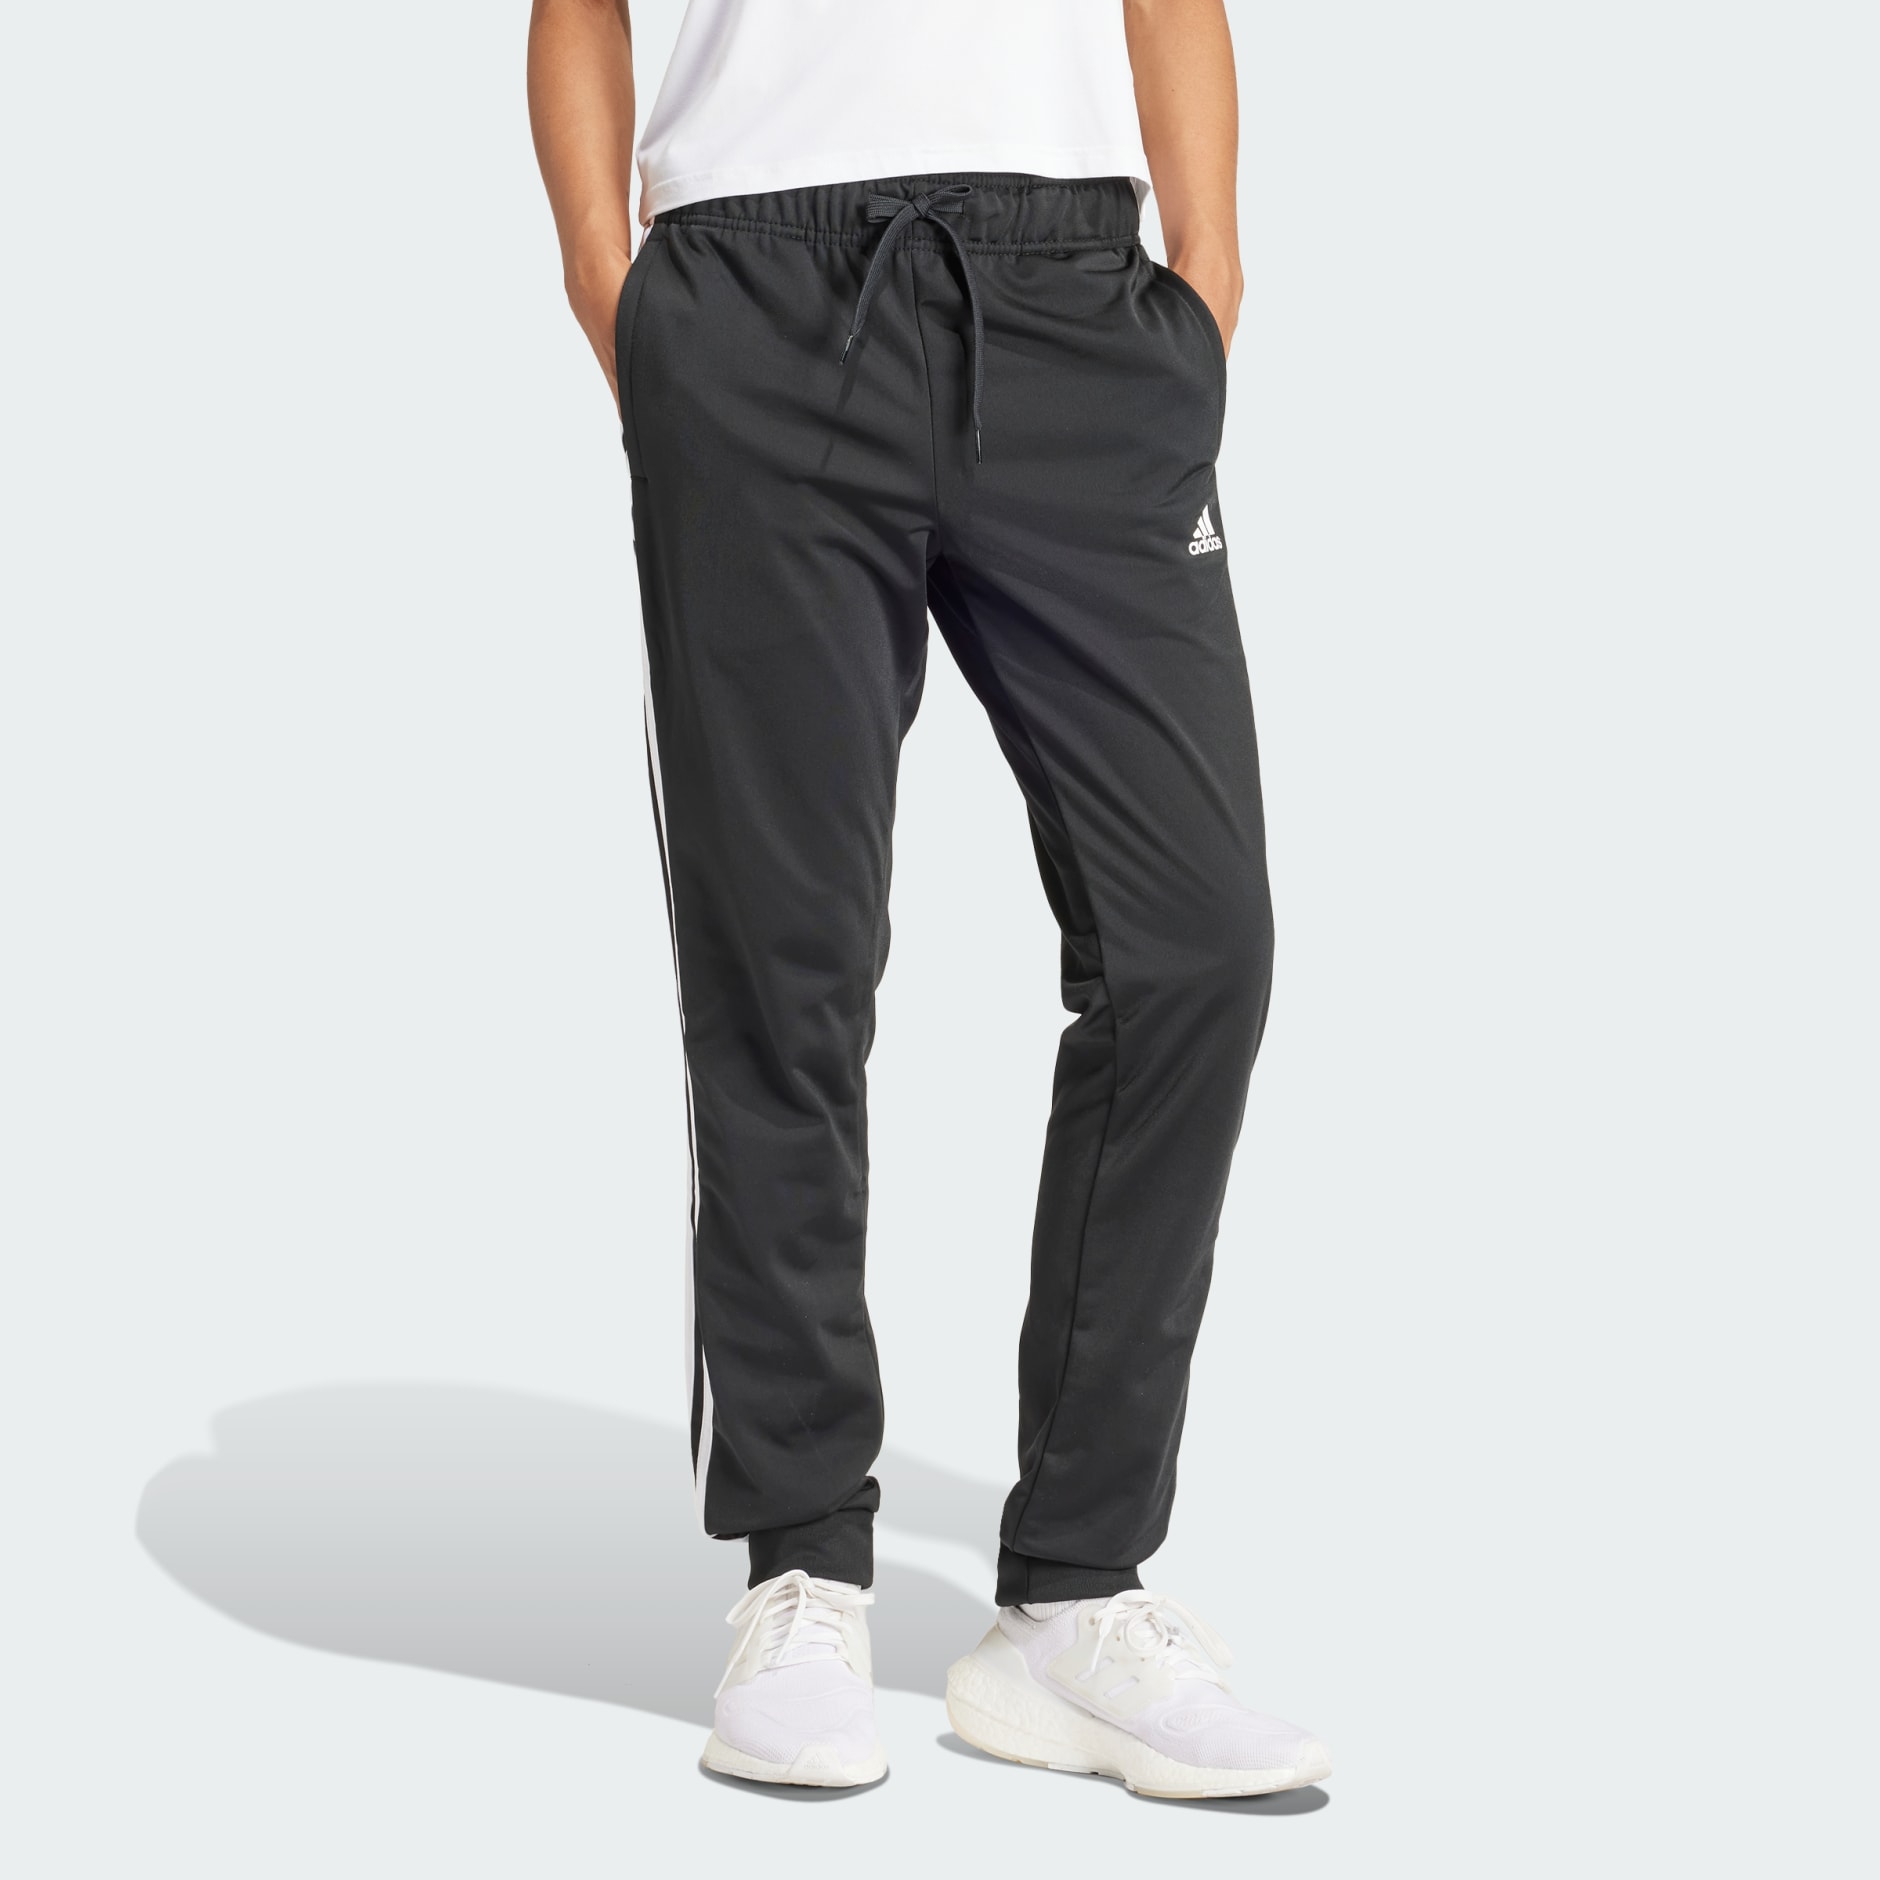 Adidas Men's Sport ID Track Pants, Black | eBay